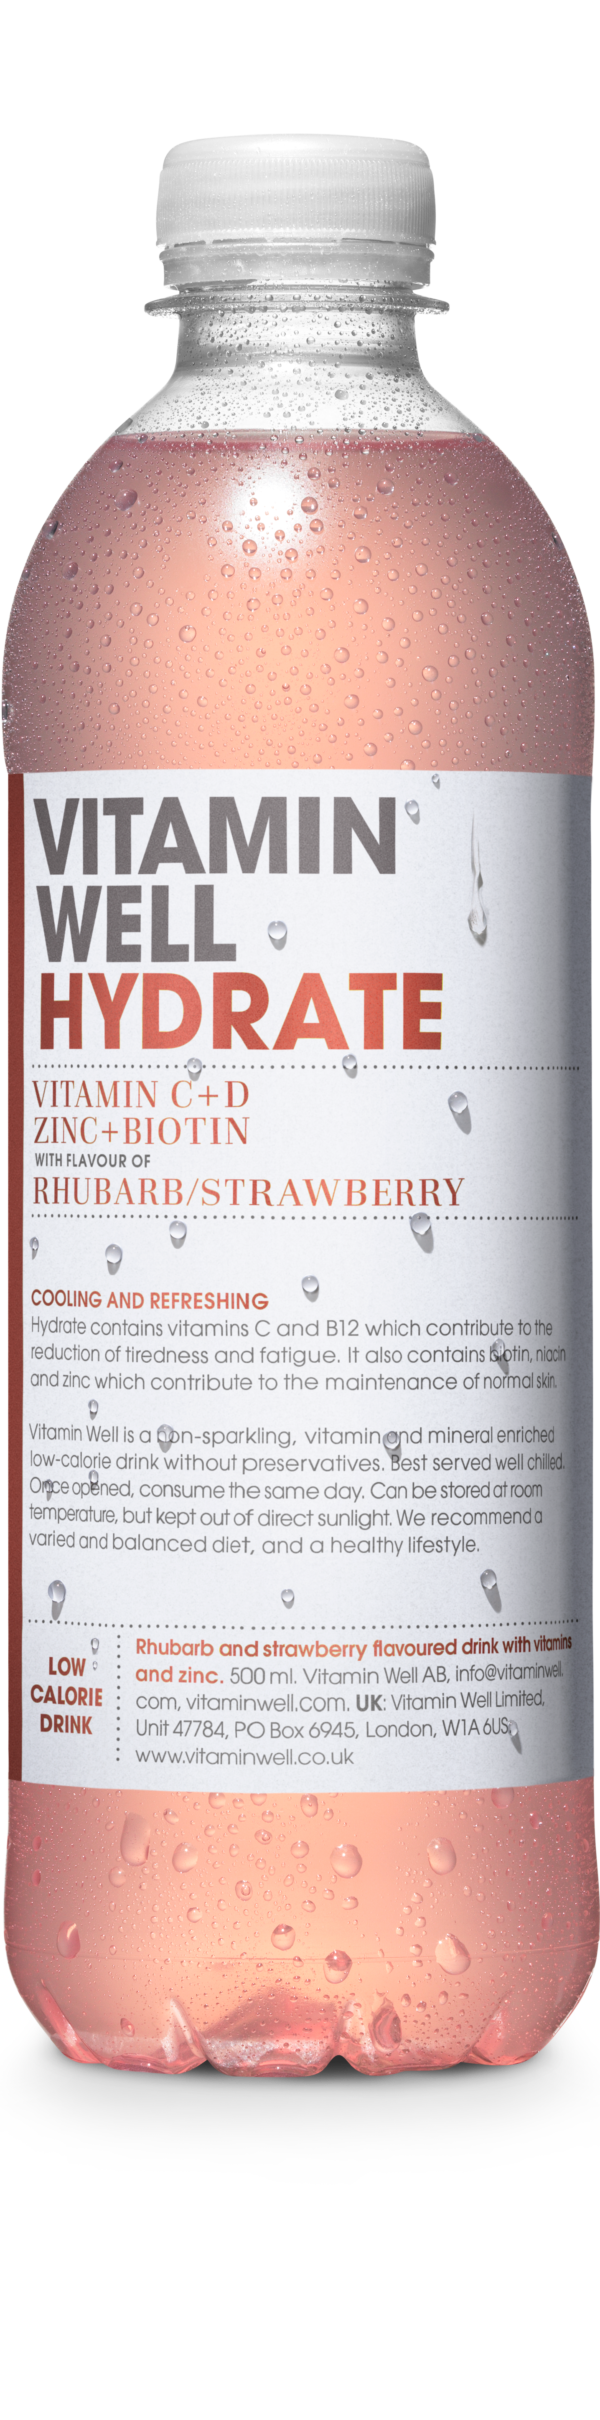 Vitamin Well HYDRATE - Rhubarb & Strawberry 12 x 500ml